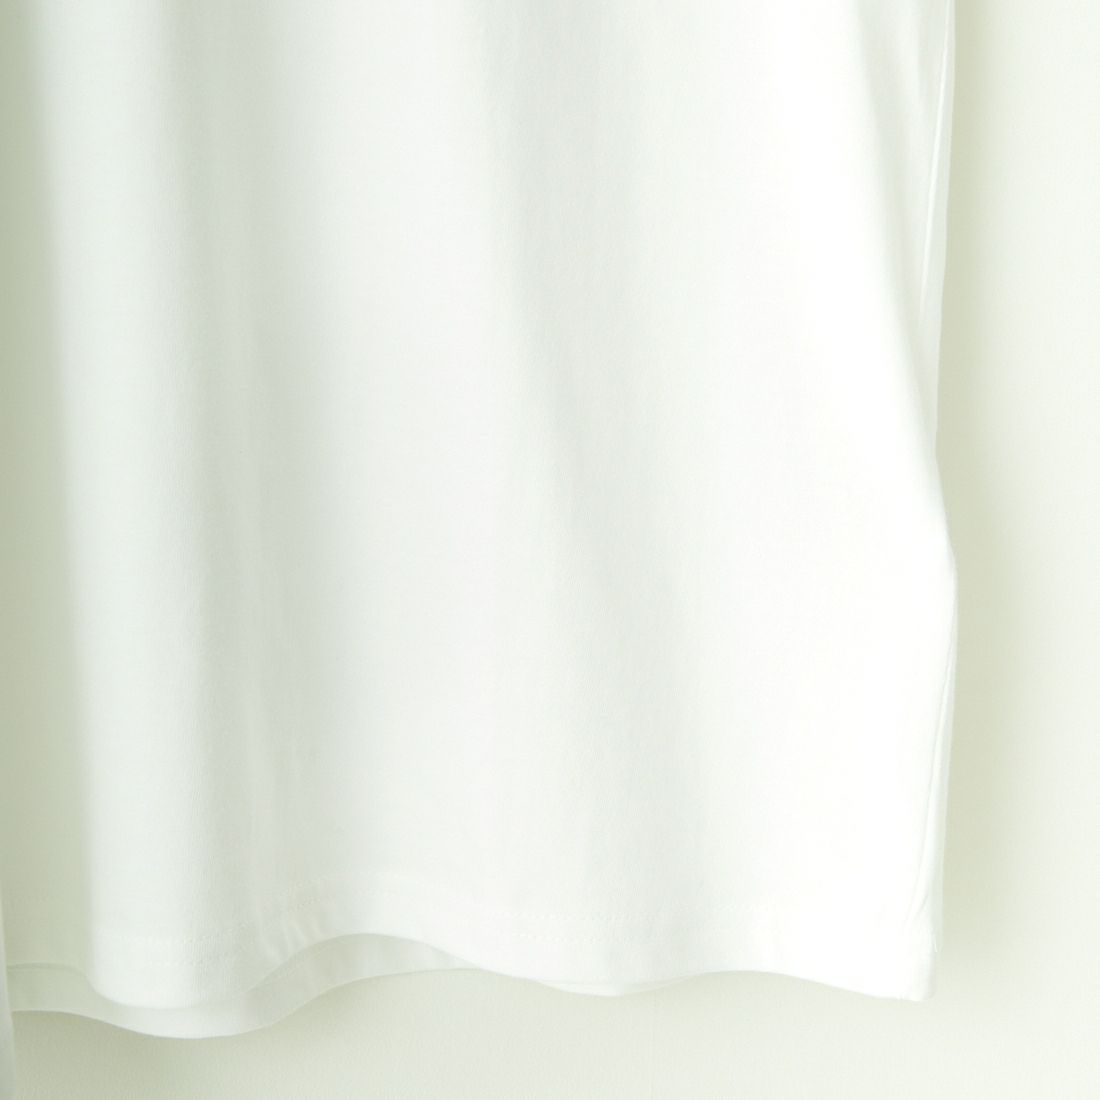 carhartt WIP [カーハートダブリューアイピー] ショートスリーブ アートサプライTシャツ [I033117] WHITE